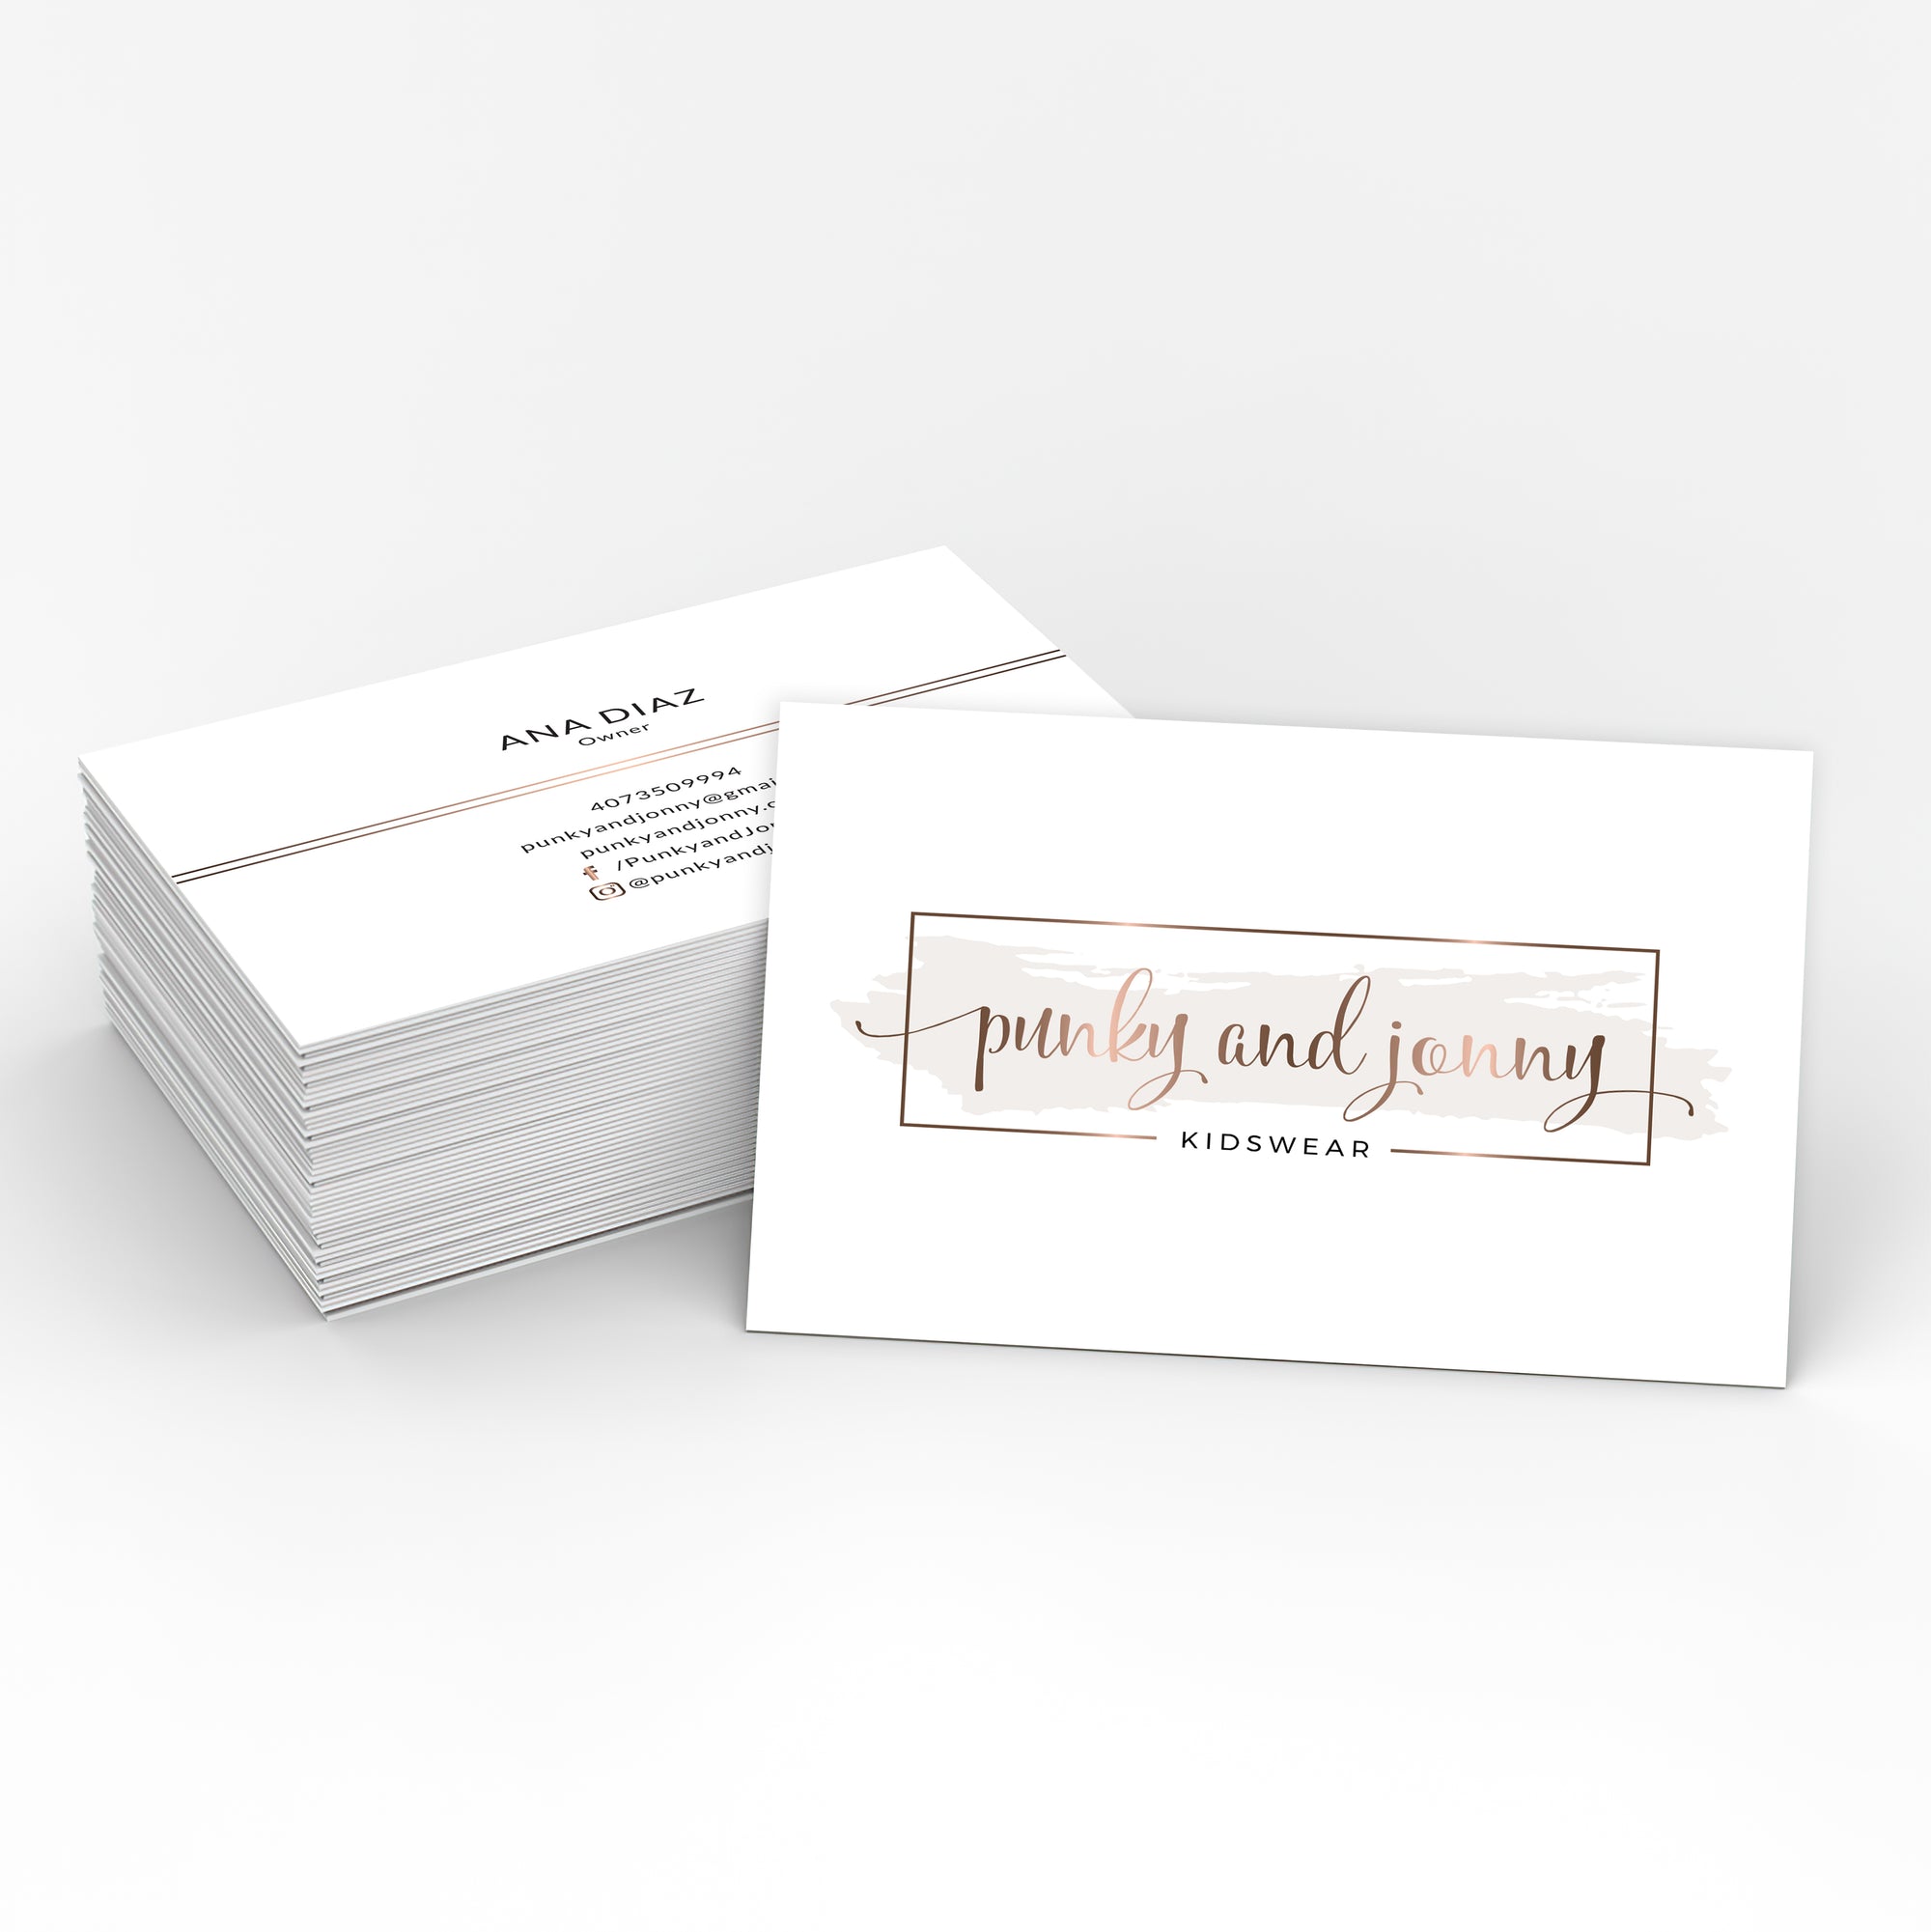 Modern Custom Design for Premium Standard - sized Printed Business Cards